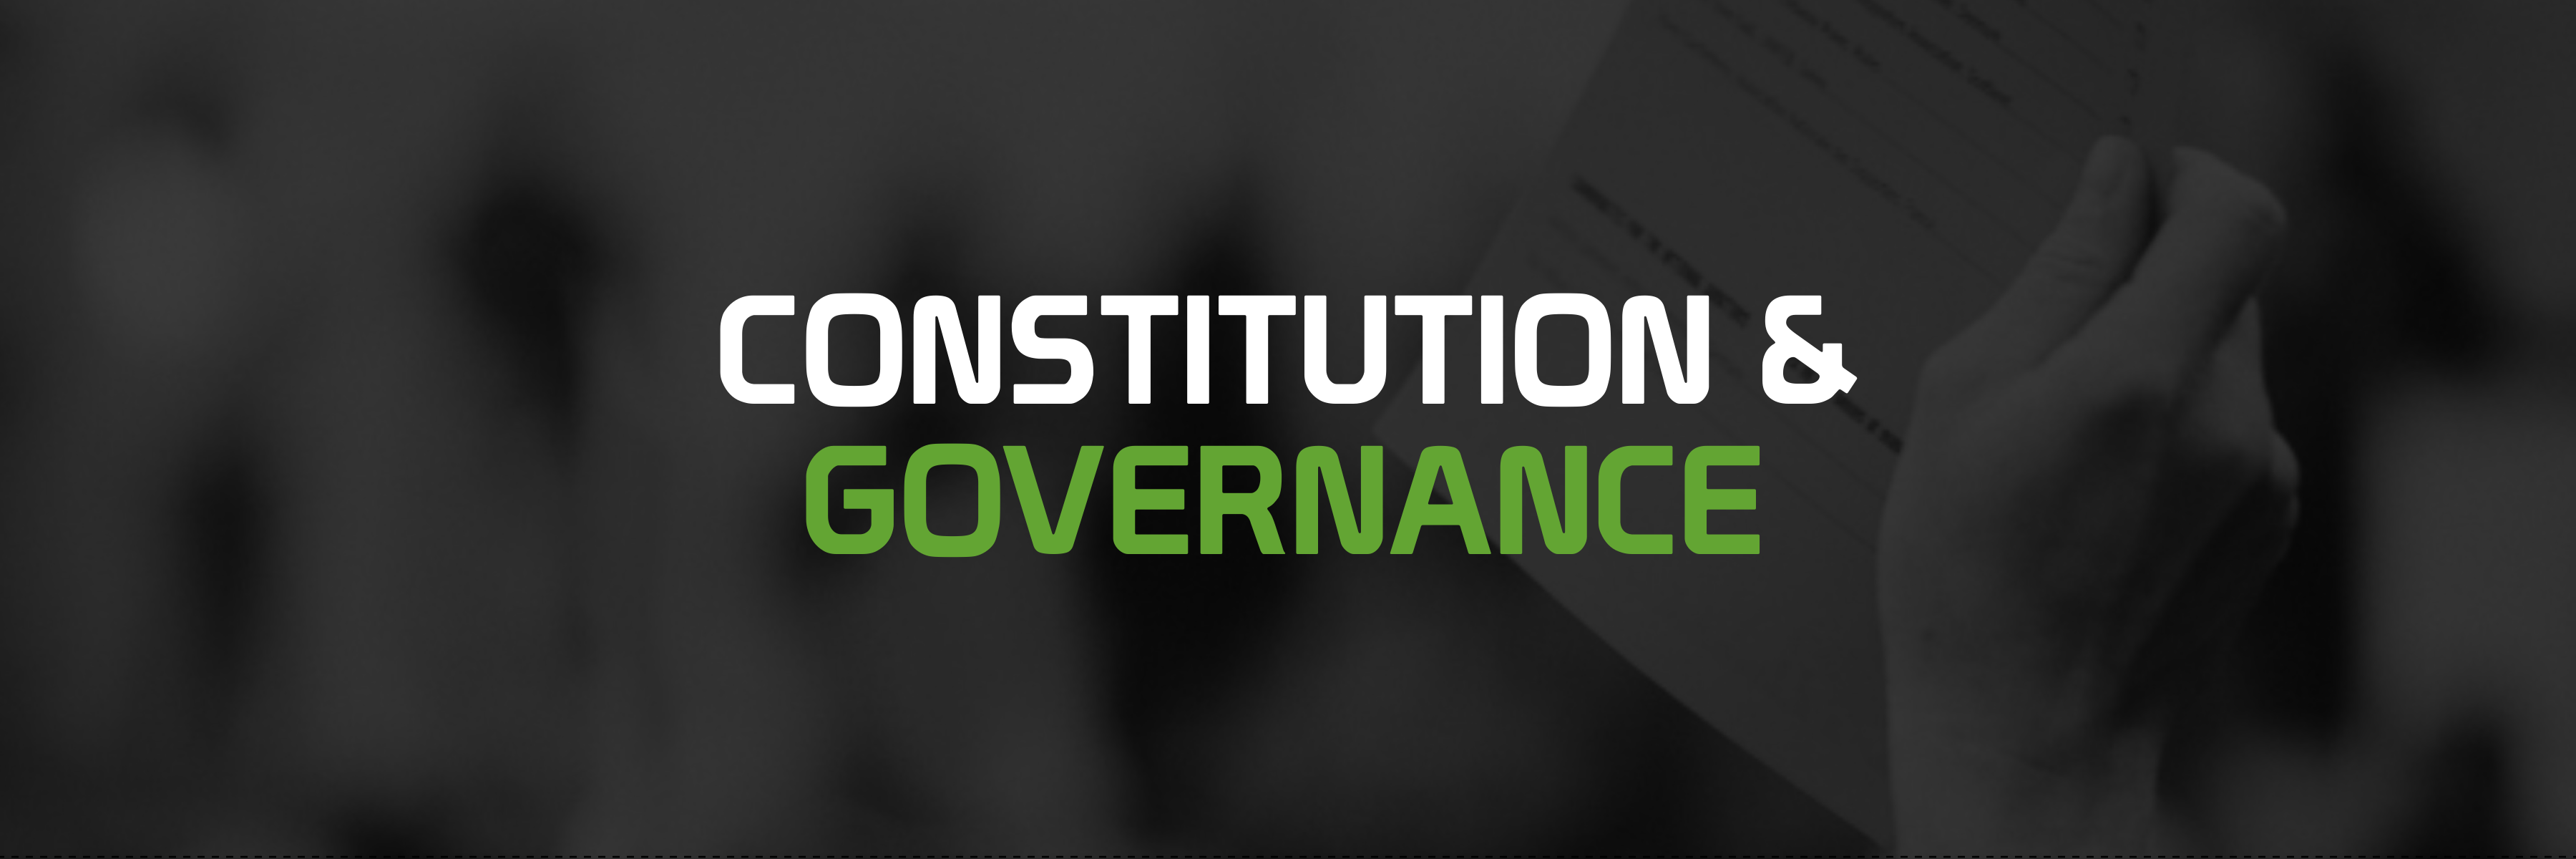 Constitution & Governance Banner i